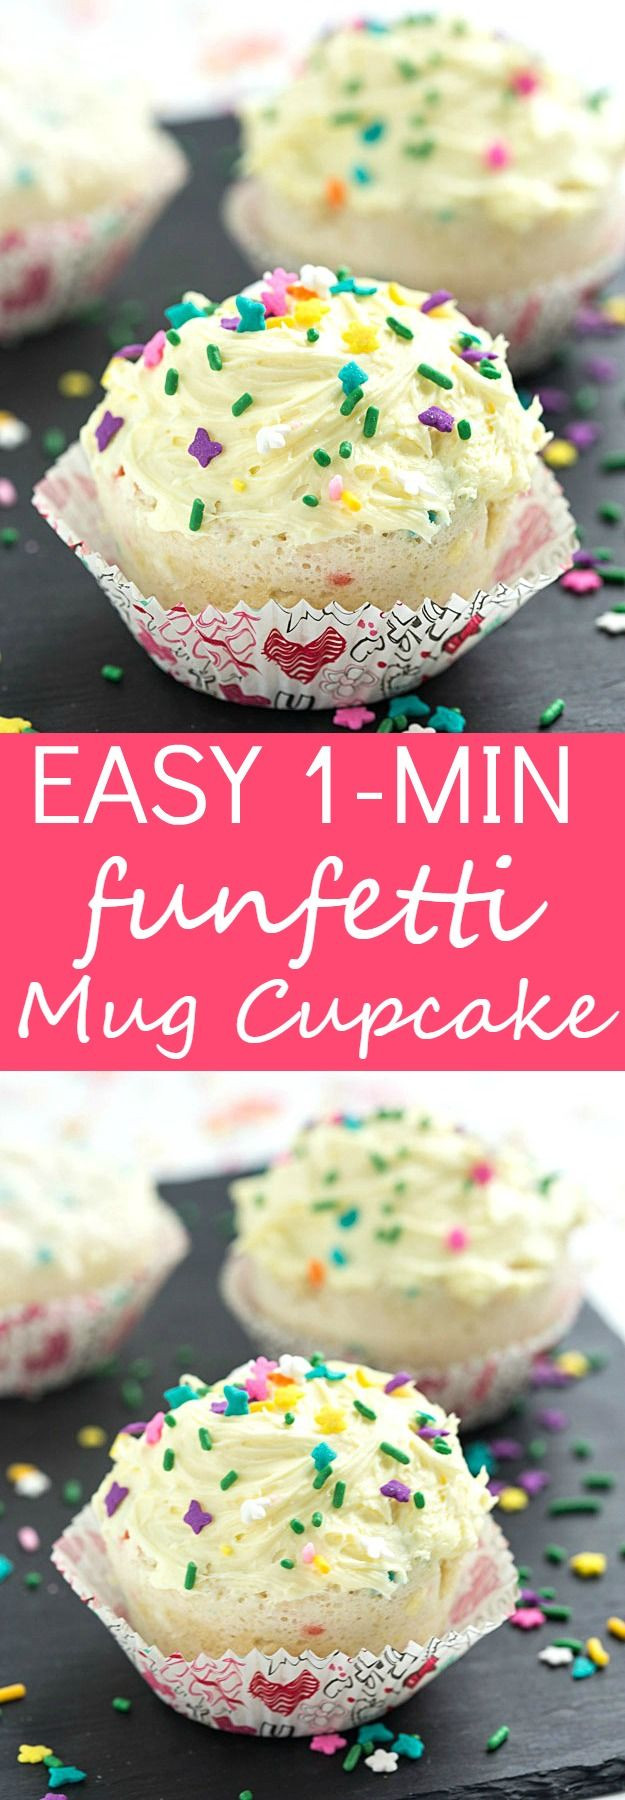 Microwave Cupcakes In A Mug
 Easy 1 Minute Mug "Cupcake" Recipe